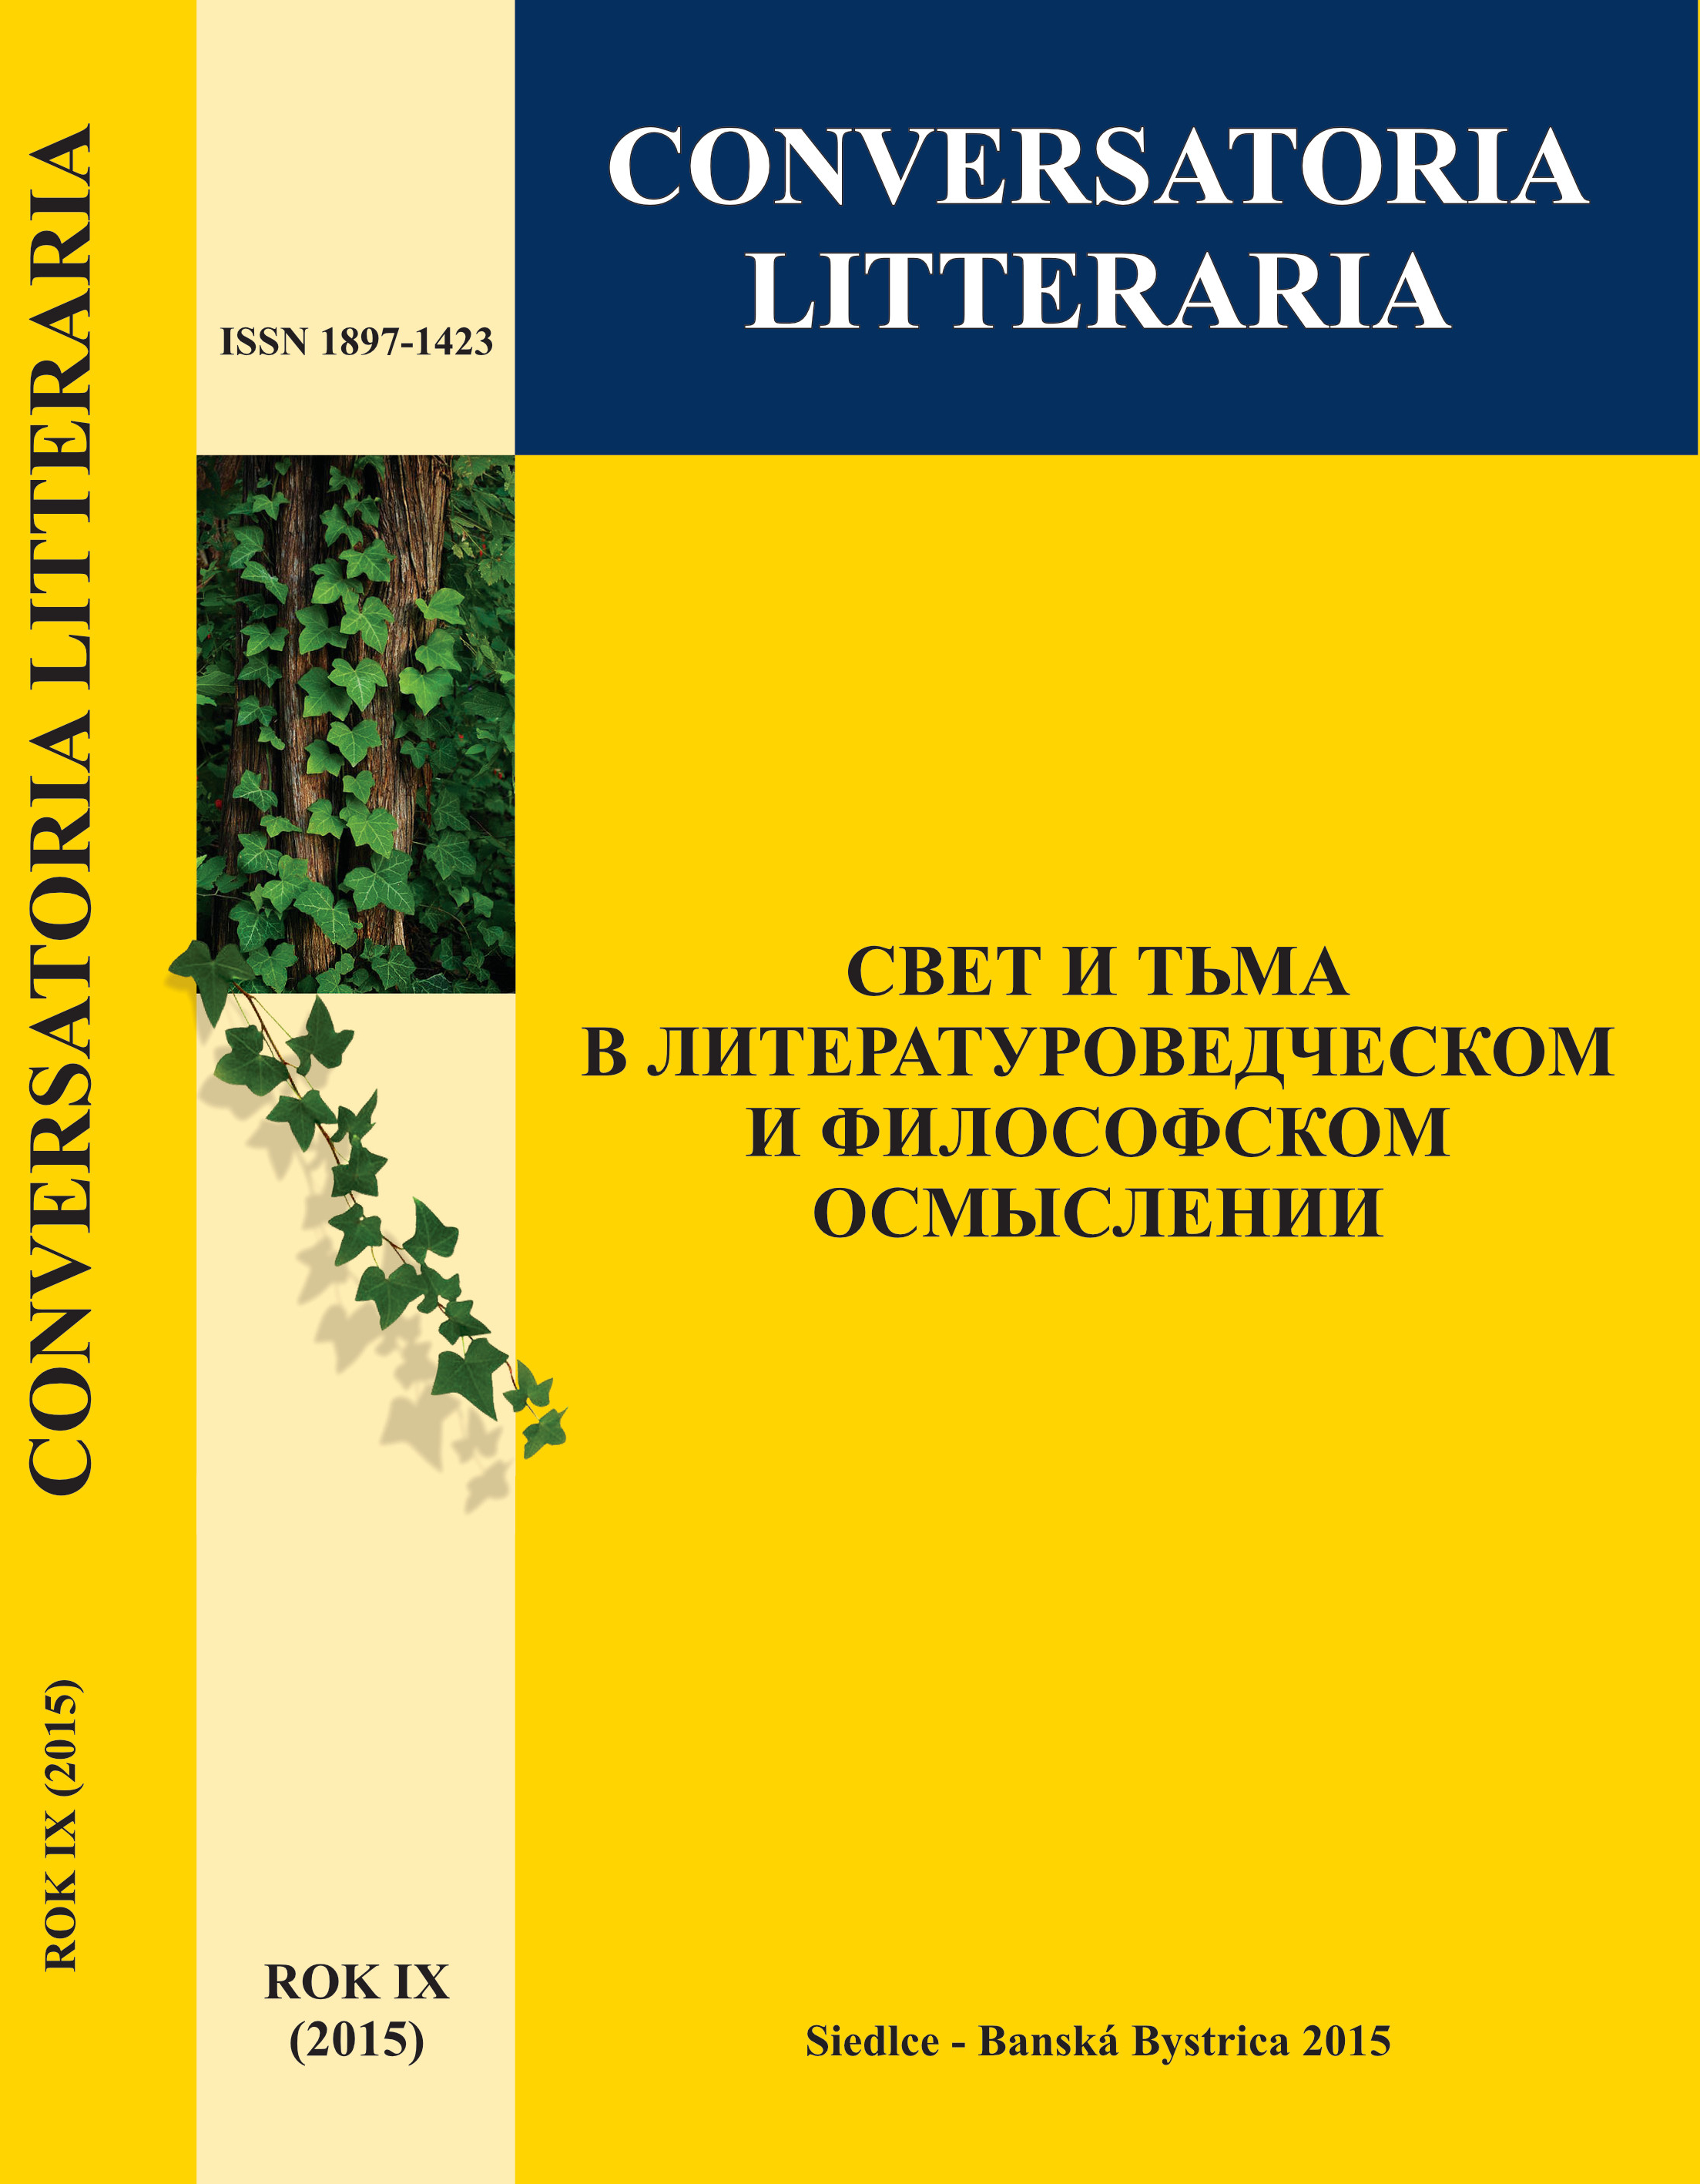 Okładka czasopisma Conversatoria Litteraria 2015 (tom 9)